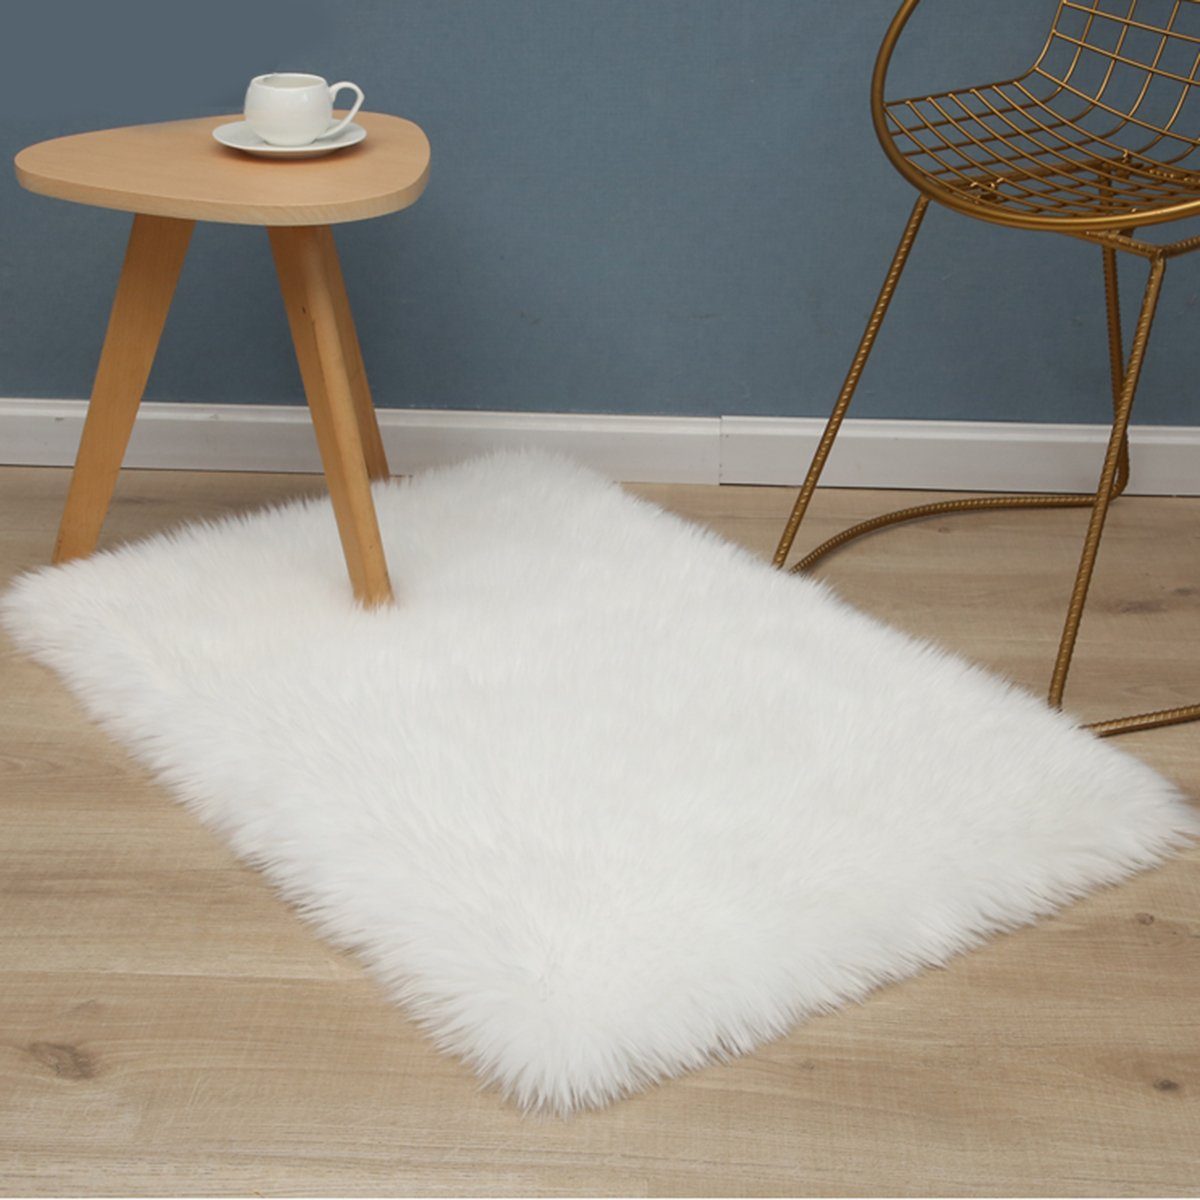 Teppich Flauschig dick, rechteckig, weich warm, Boden Home Deko, Rosnek, Höhe: 60 mm Weiß